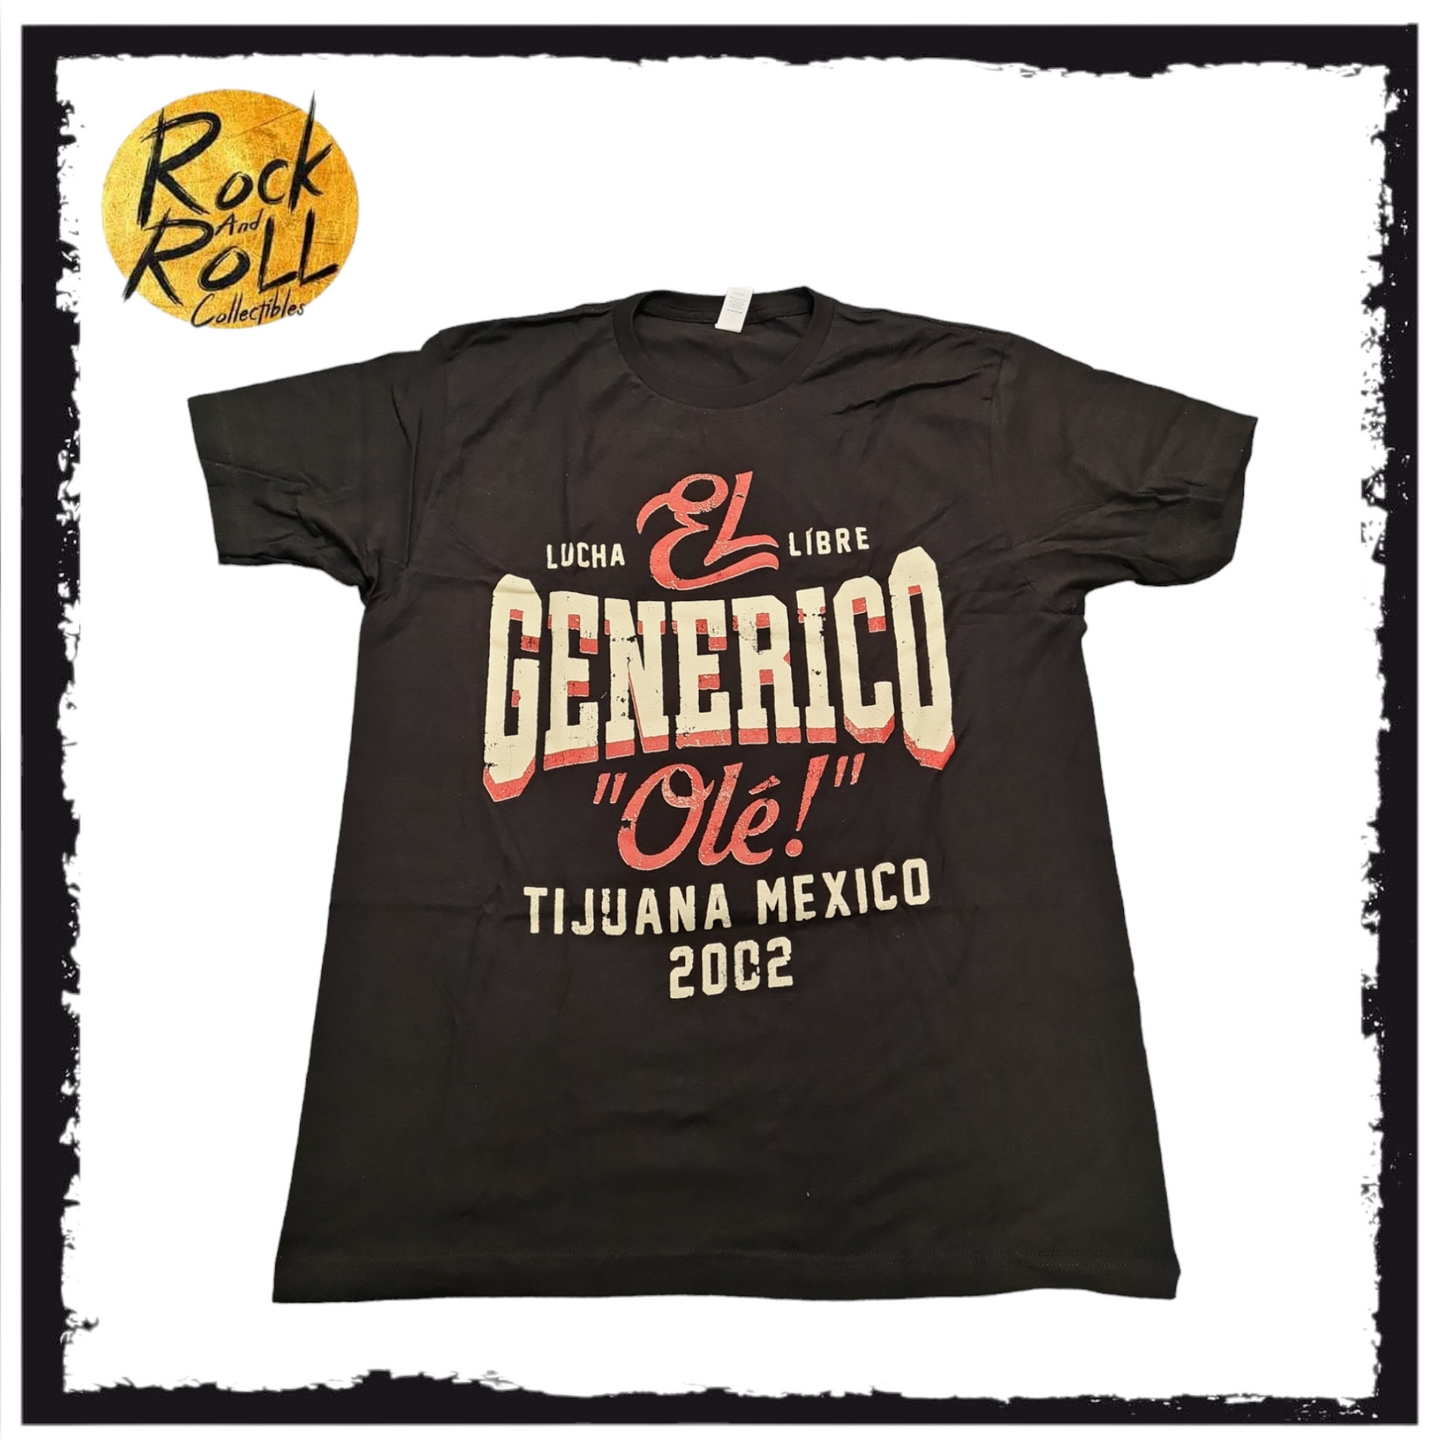 El Generico (Sami Zayn ROH) "Ole" T-Shirt - Size (US) Large